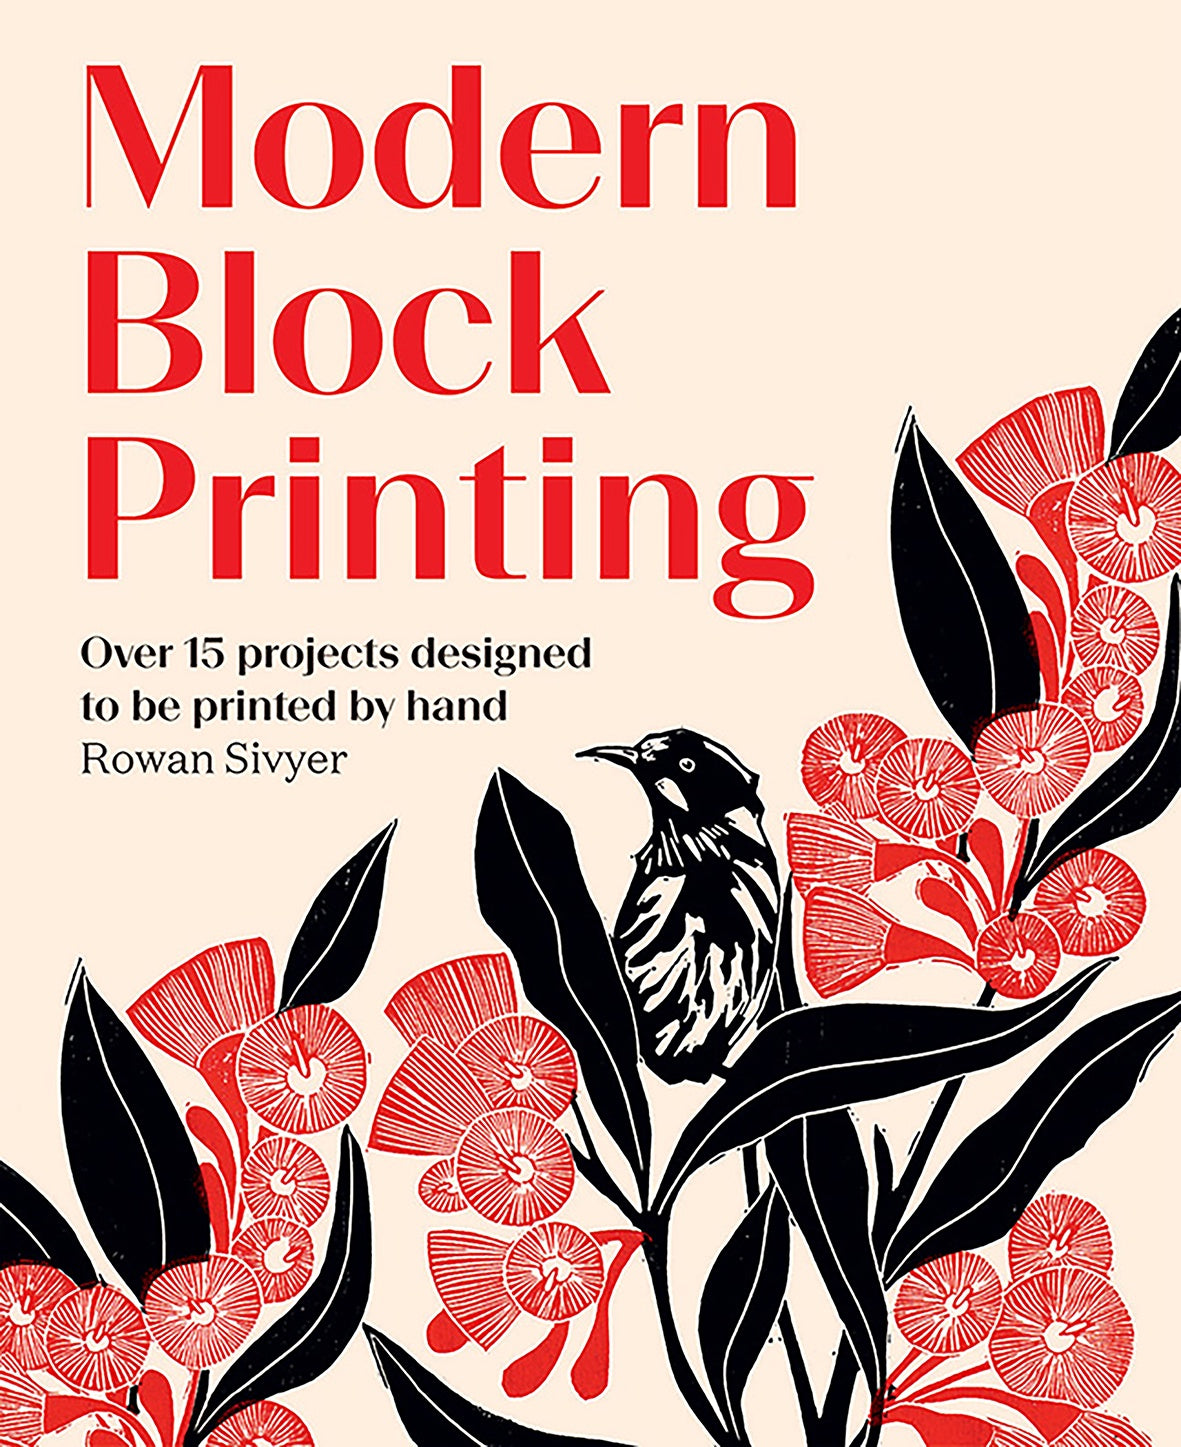 Modern Block Printing  by Rowan Sivyer